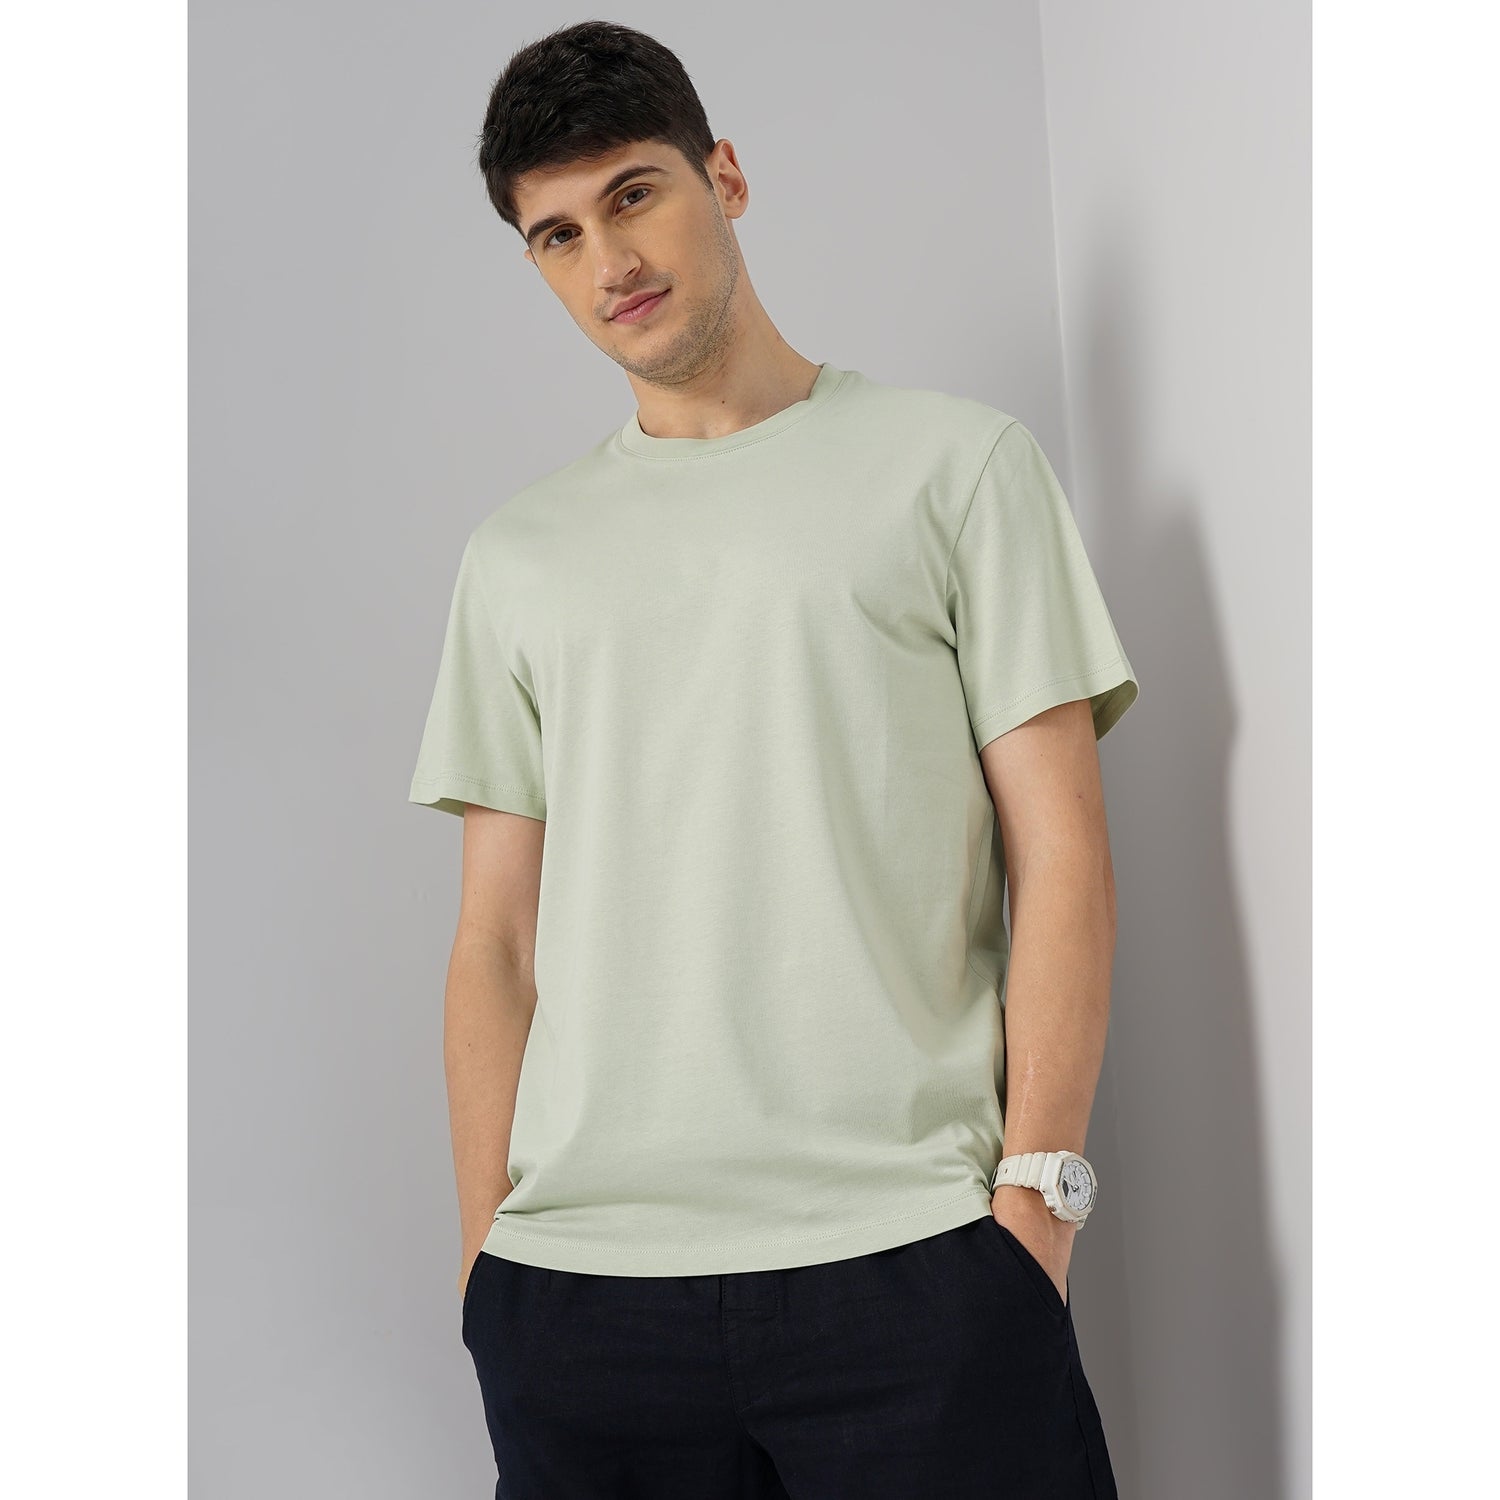 Men Green Round Neck Solid Regular Fit Cotton T-Shirt (TEBASE2)